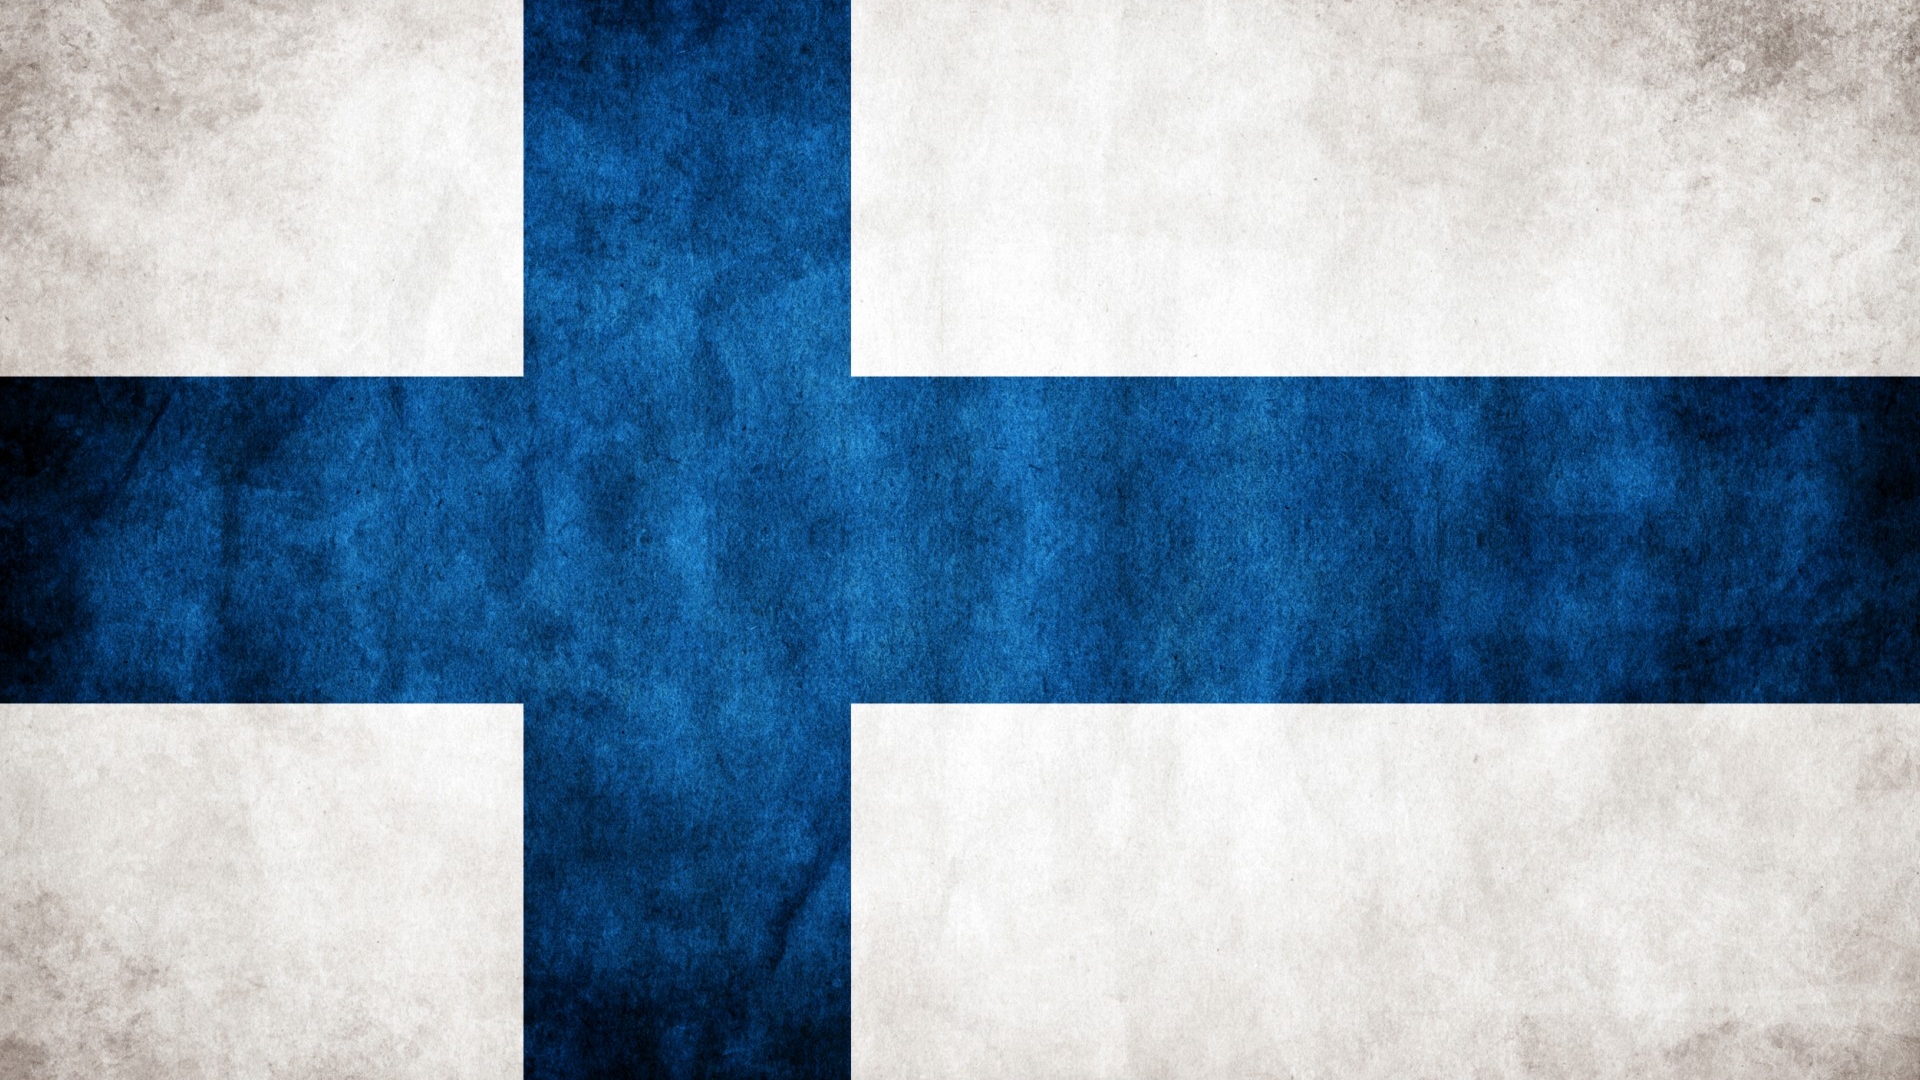 Finland Flag wallpaper